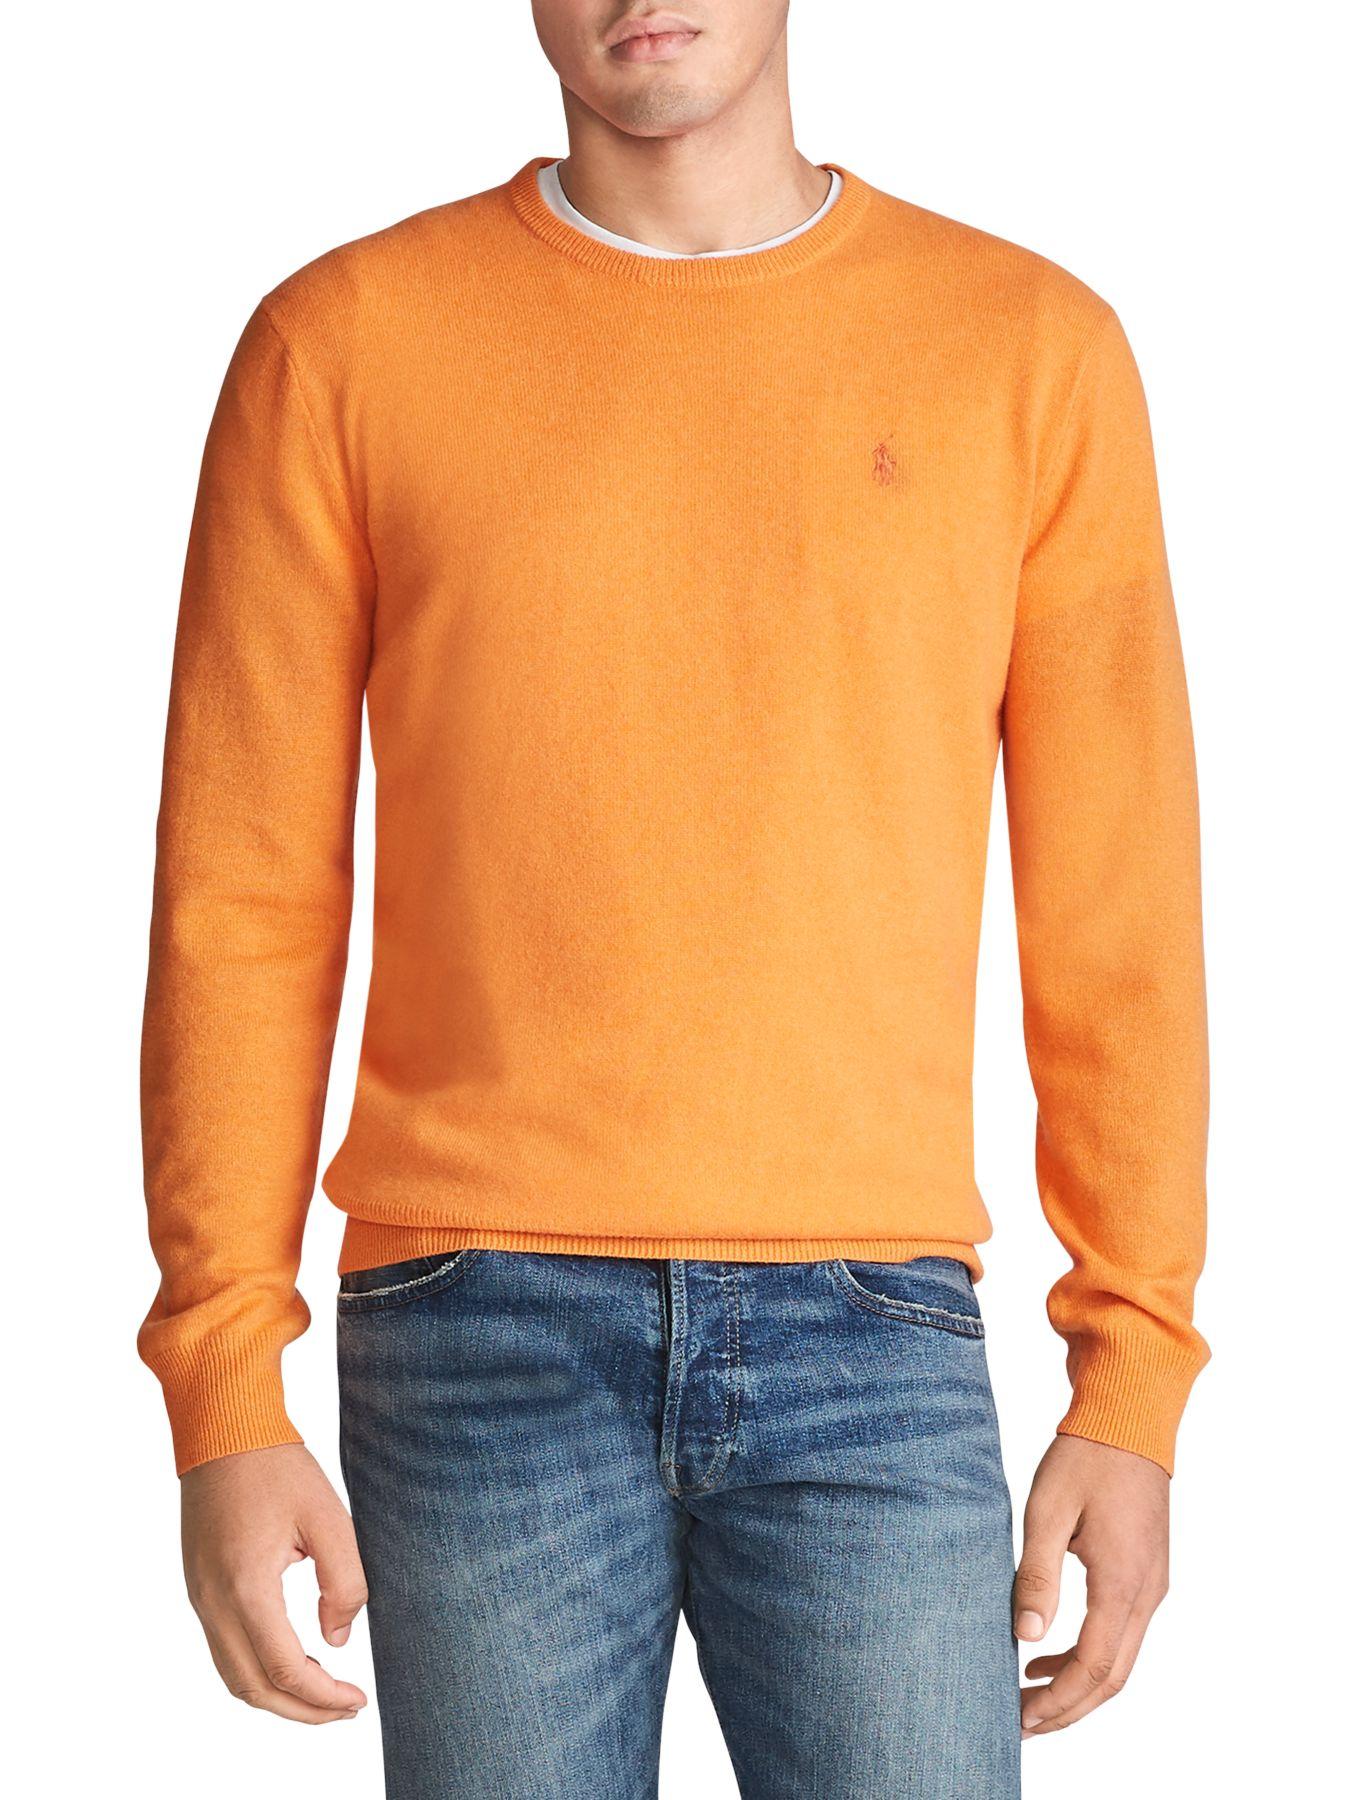 Polo Ralph Lauren Washable Cashmere Sweater in Orange for Men - Lyst